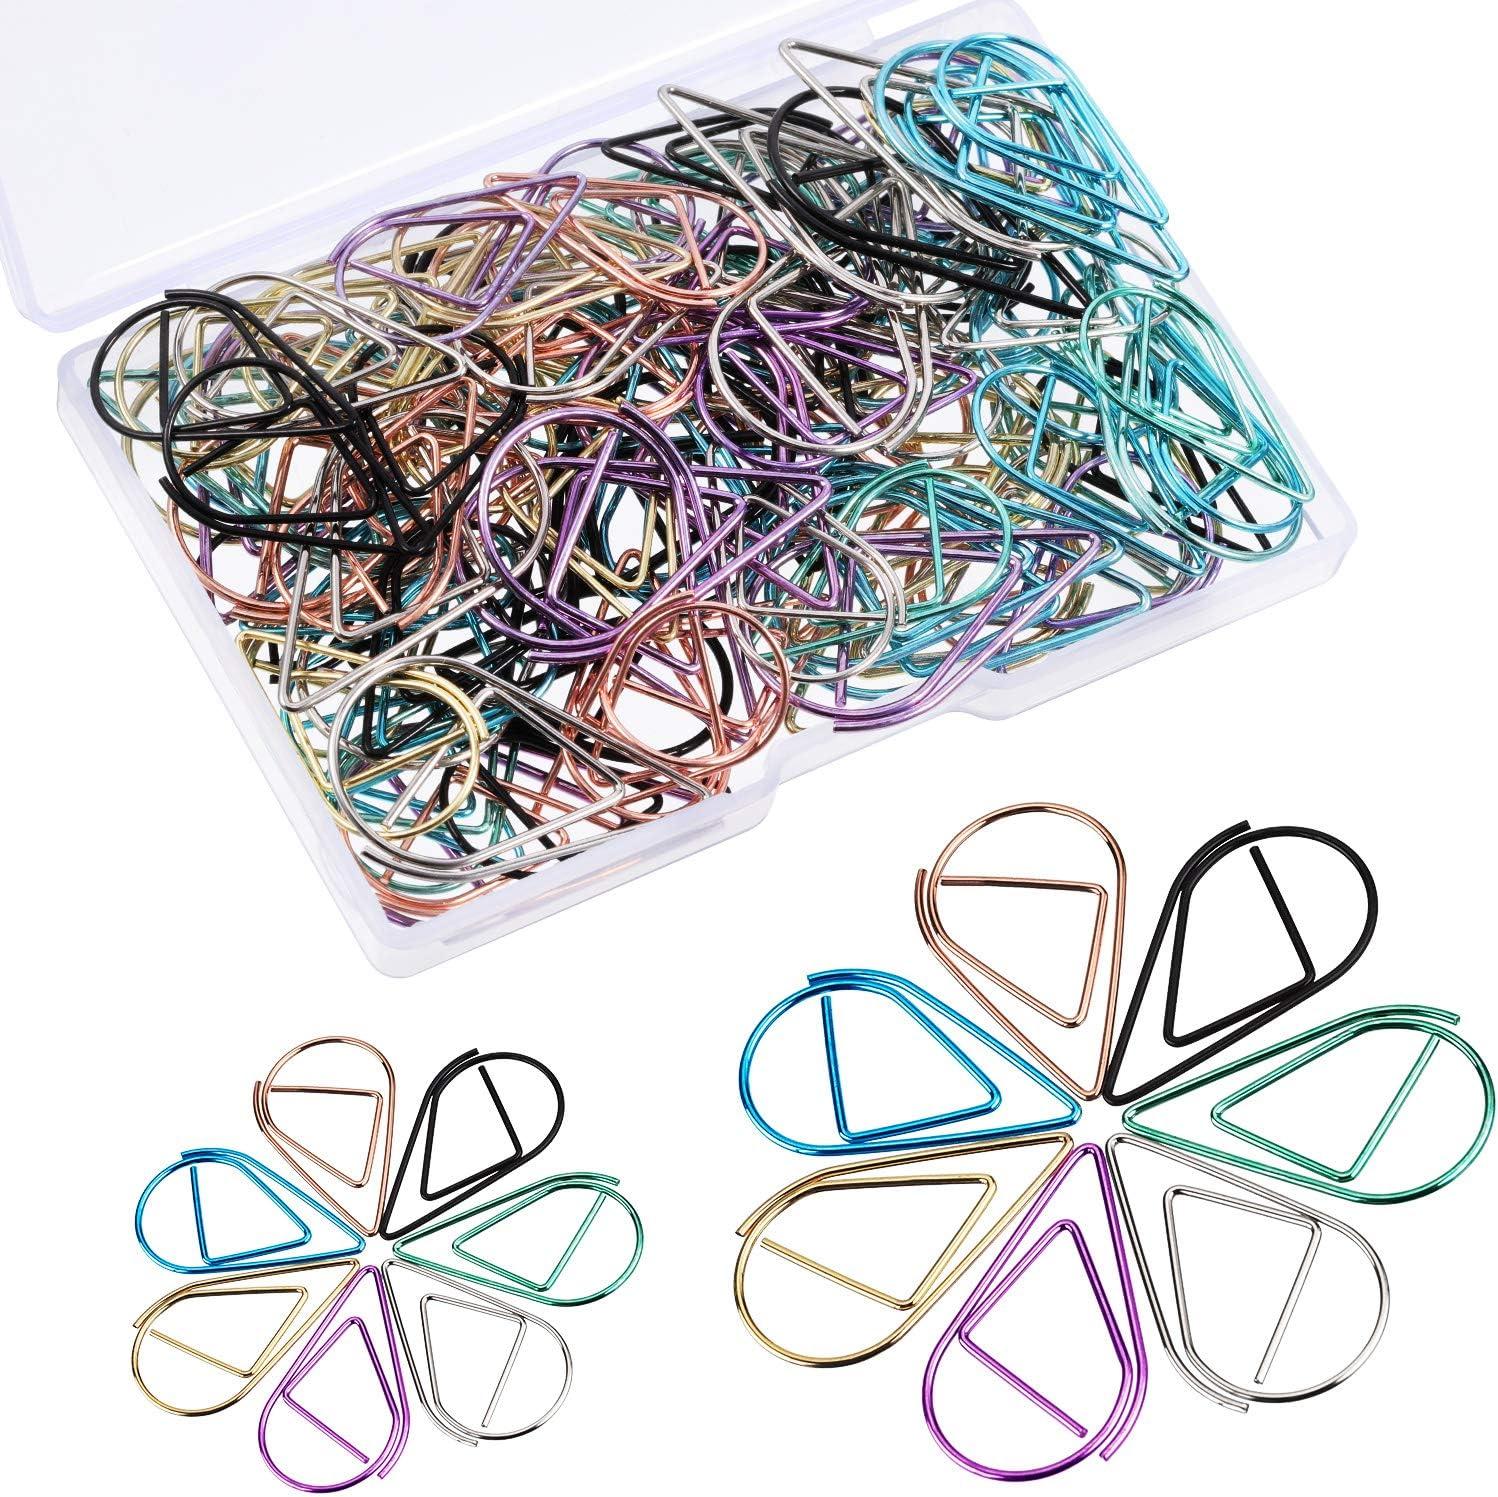 frienda 105 pieces multicolor paperclips metal paper clips for school office supplies size a  frienda